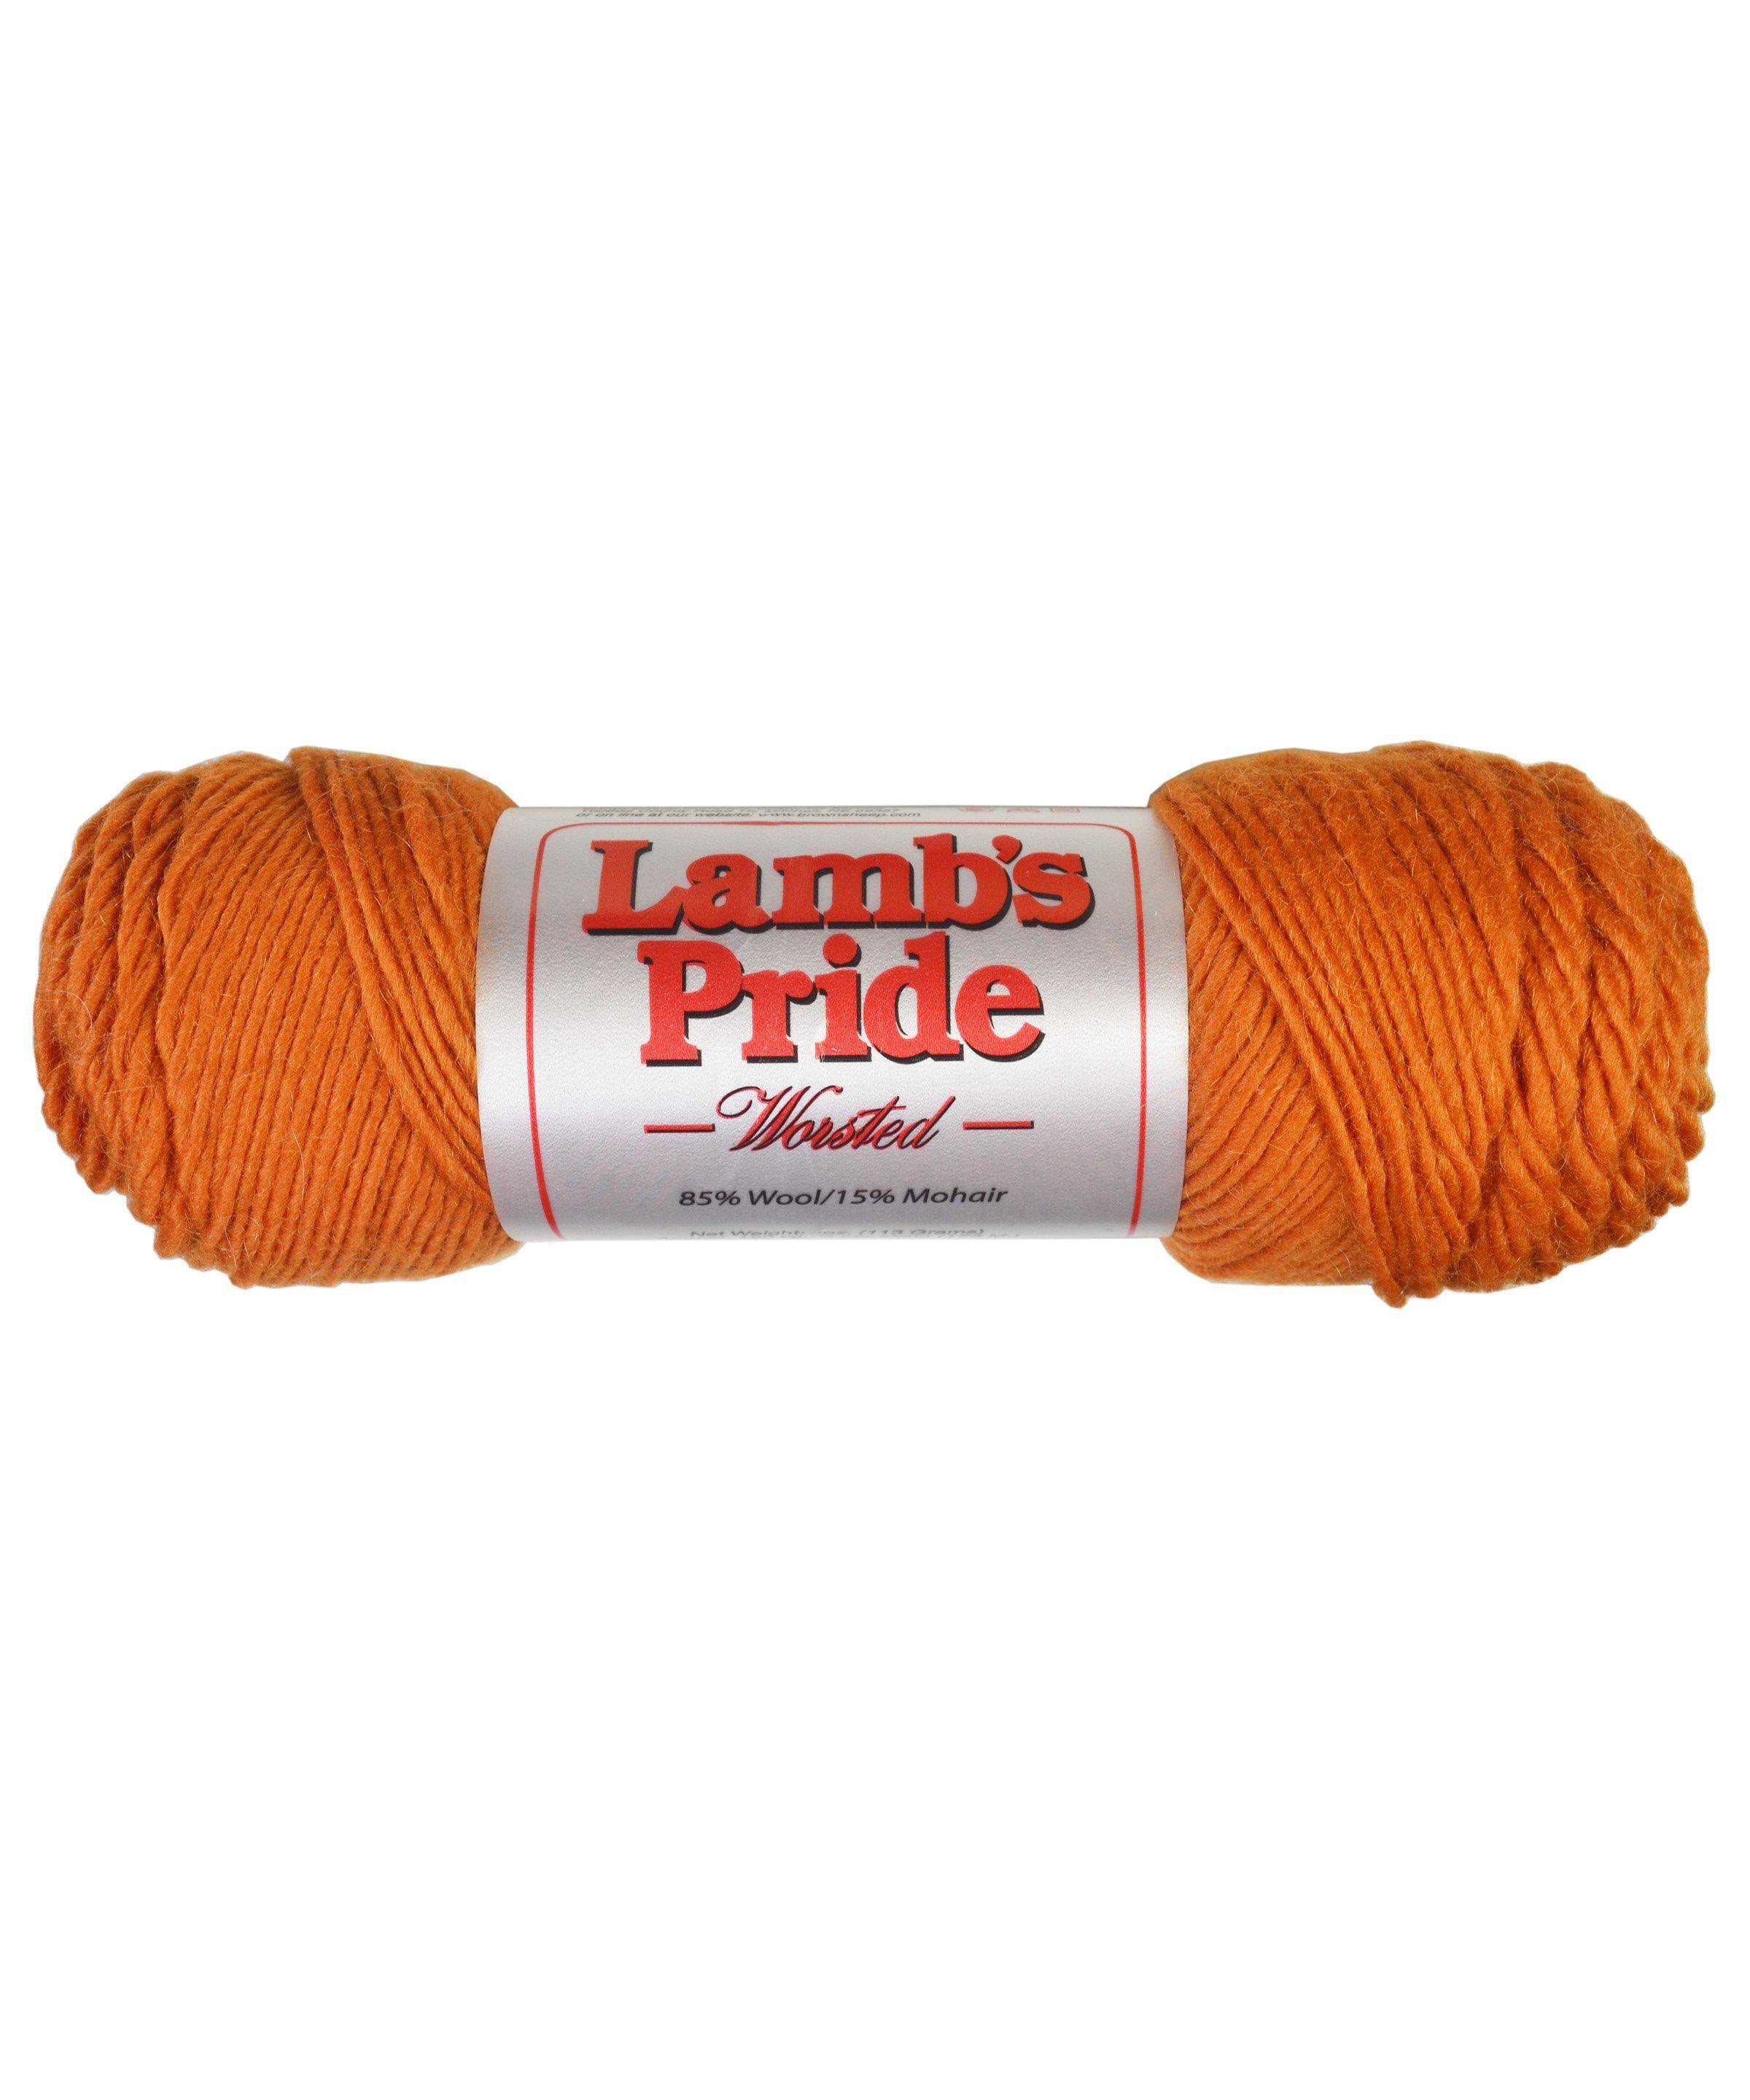 Brown Sheep Lamb's Pride Worsted Orange You Glad